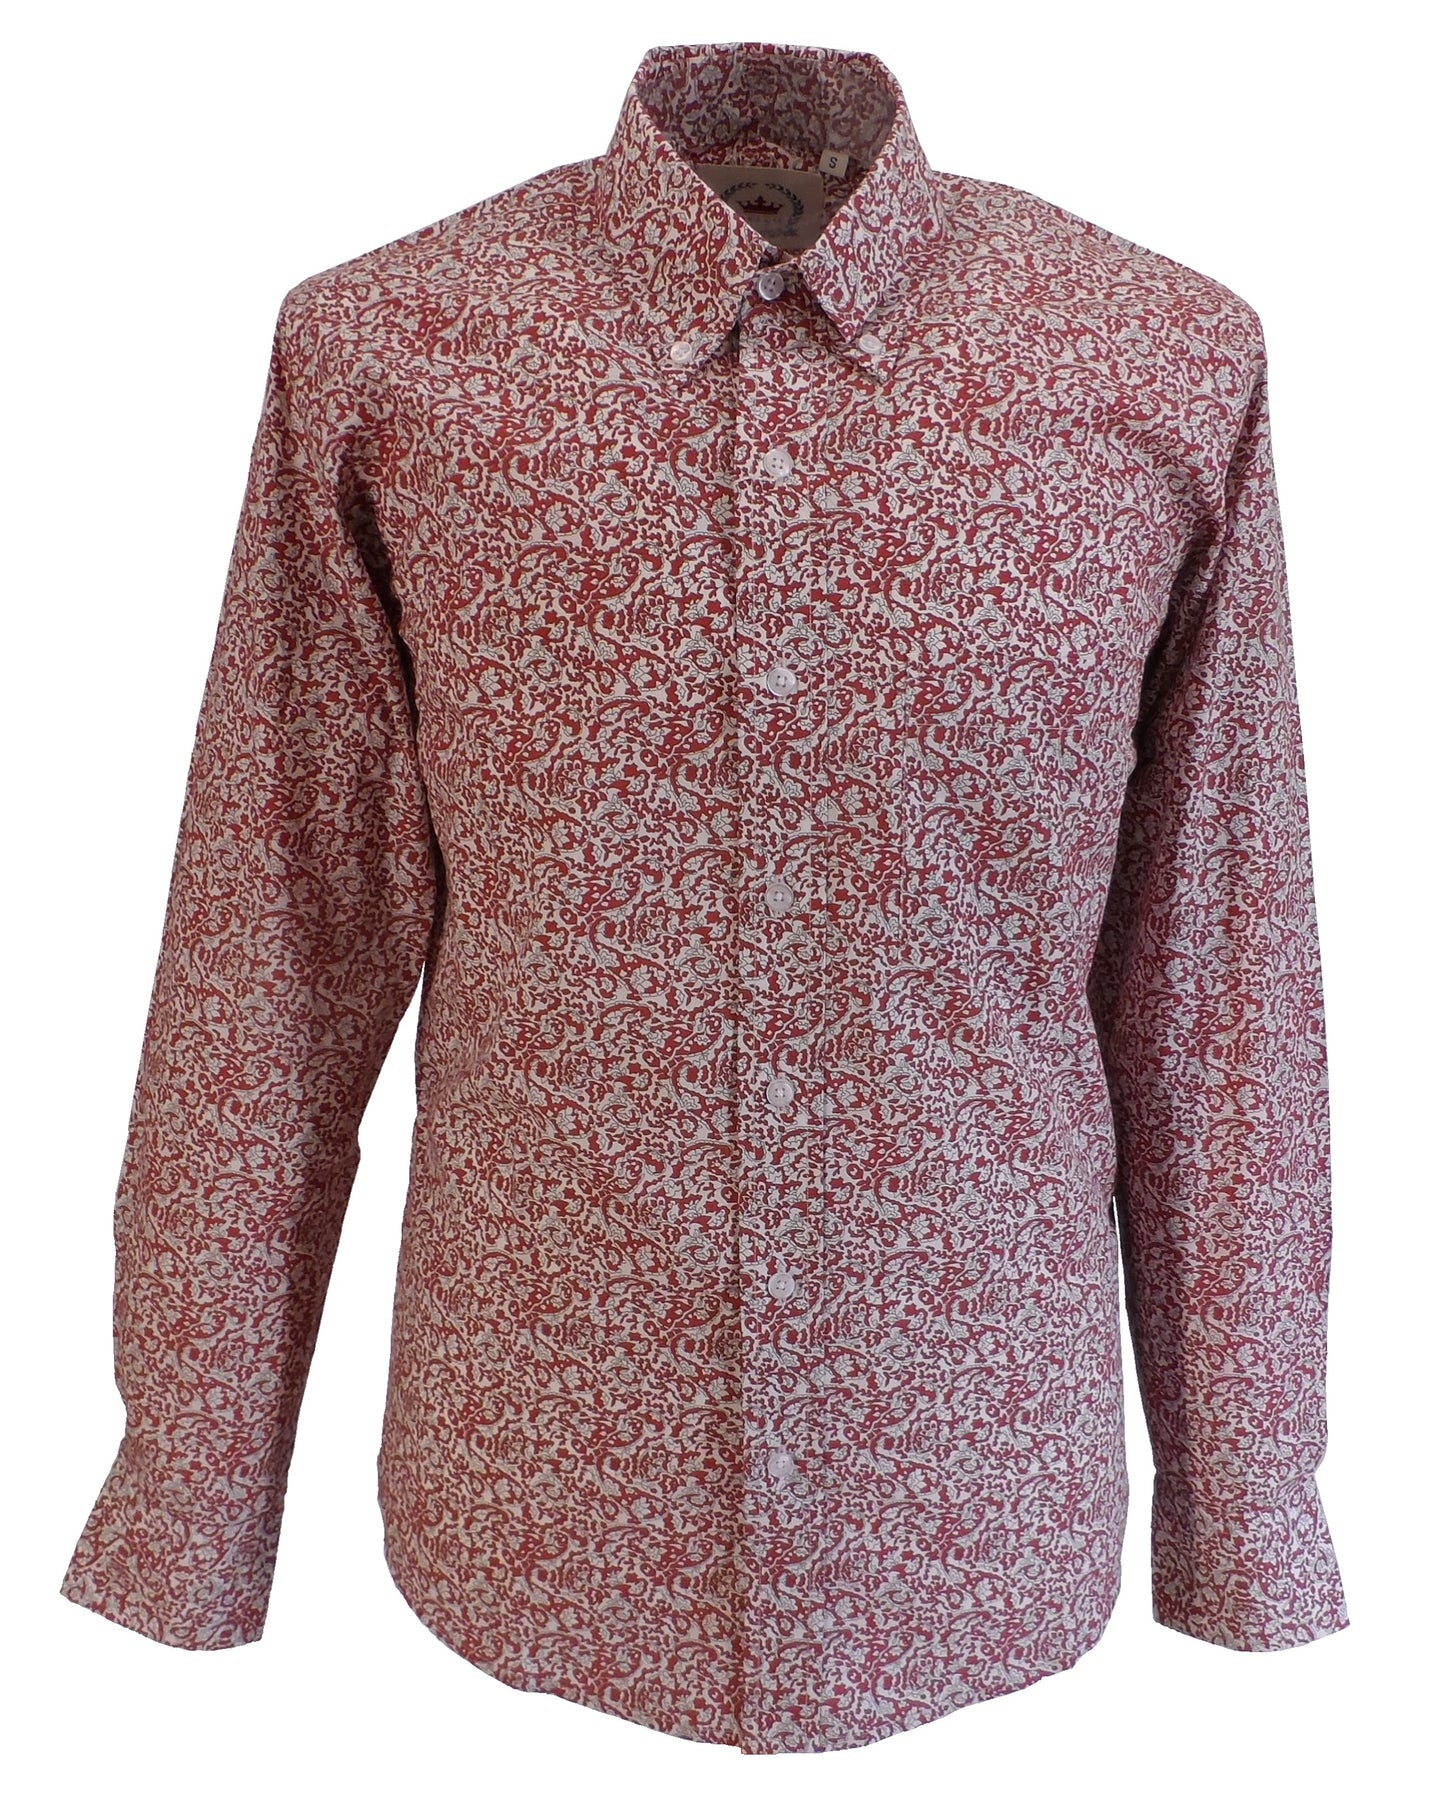 Camisas Relco paisley burdeos 100% algodón manga larga con botones